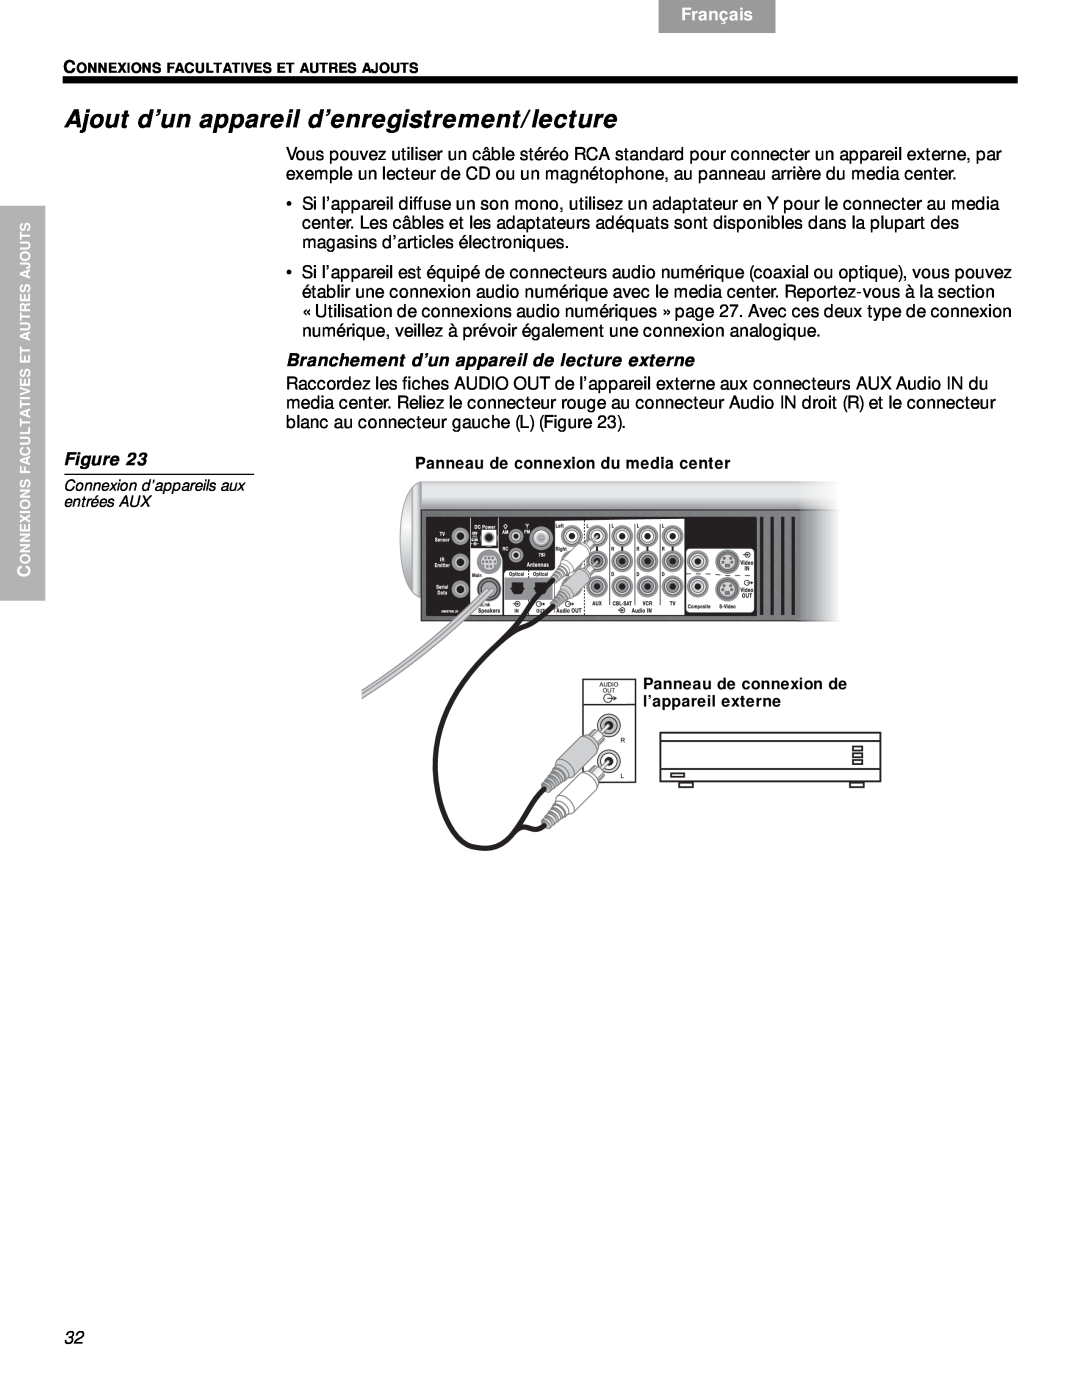 Bose VS-2 Ajout d’un appareil d’enregistrement/lecture, Branchement d’un appareil de lecture externe, Svenska, Nederlands 